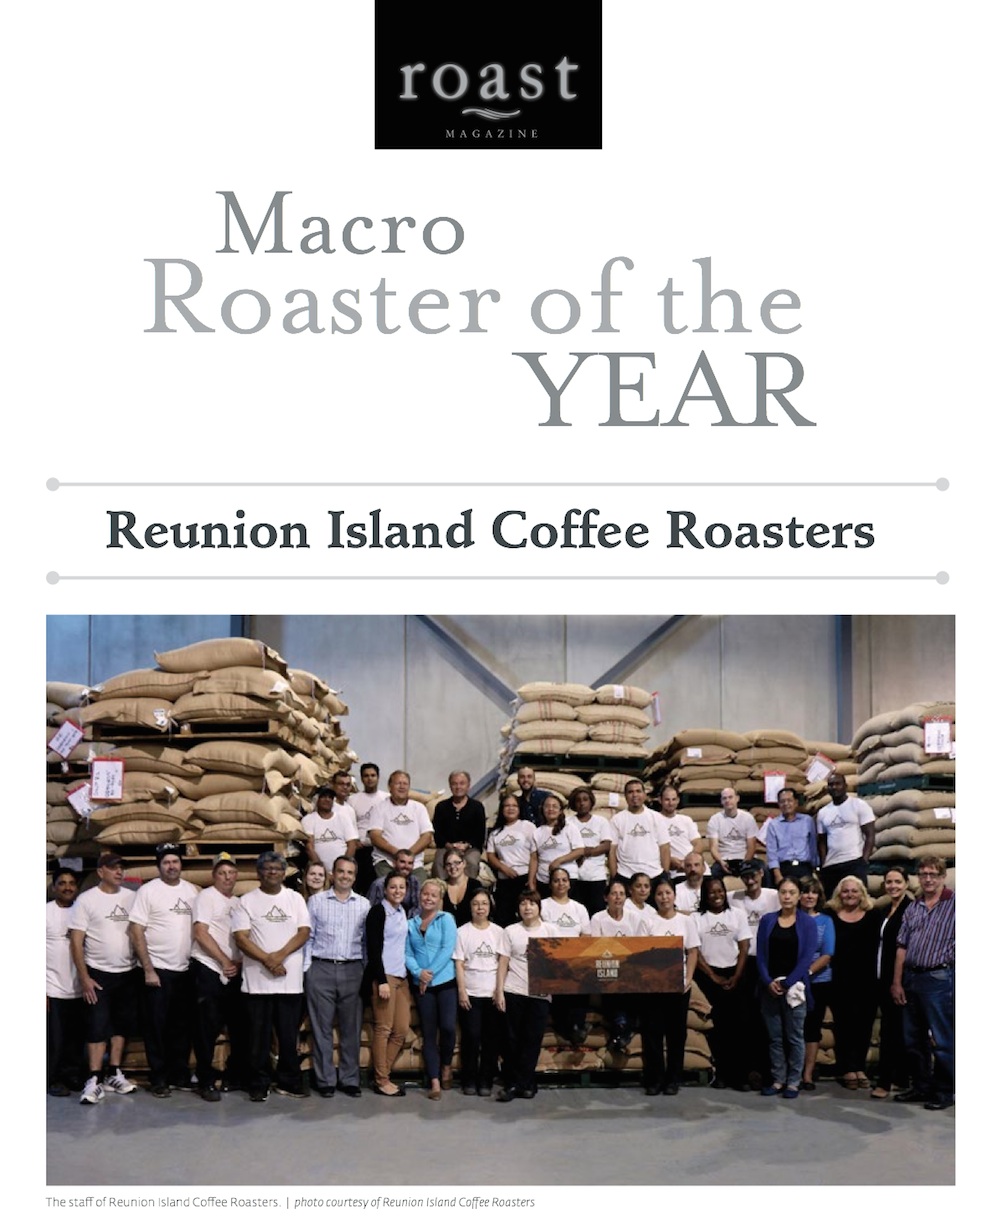 Reunion Island Coffee Roasters Roast Magazine roaster of the year